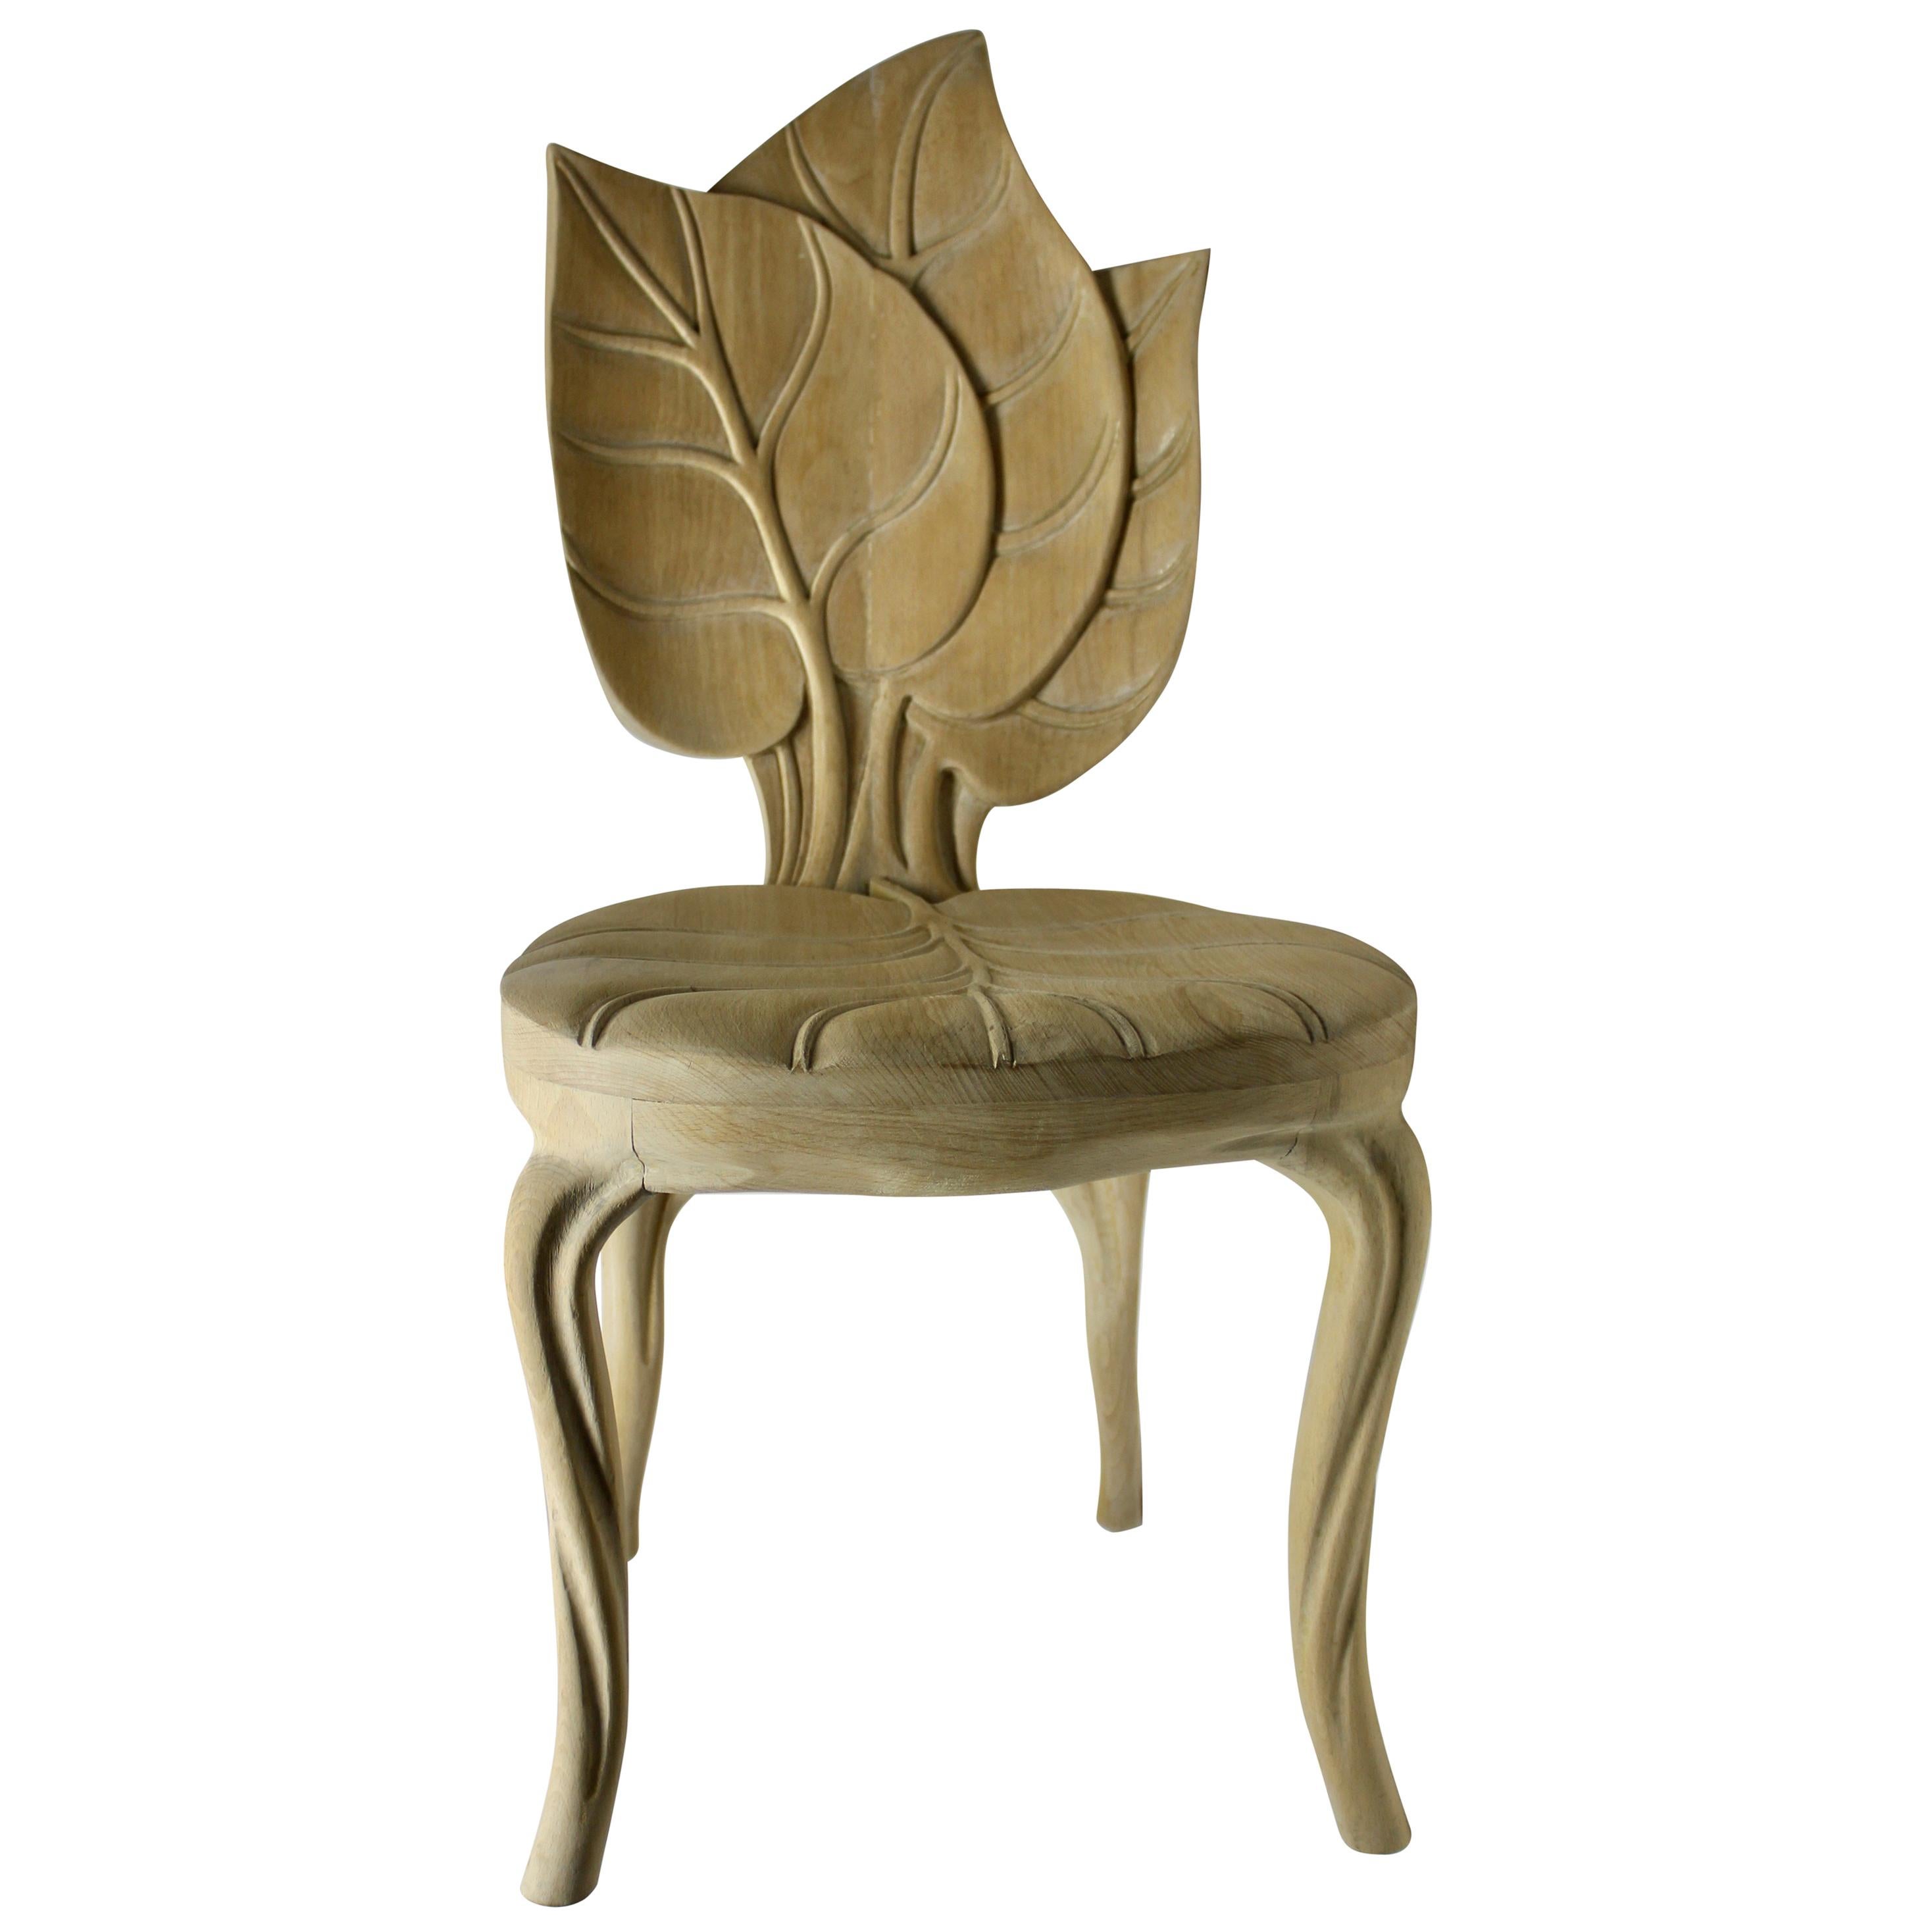 Organic Leaf Shape Wood Chair by Bartolozzi and Maioli